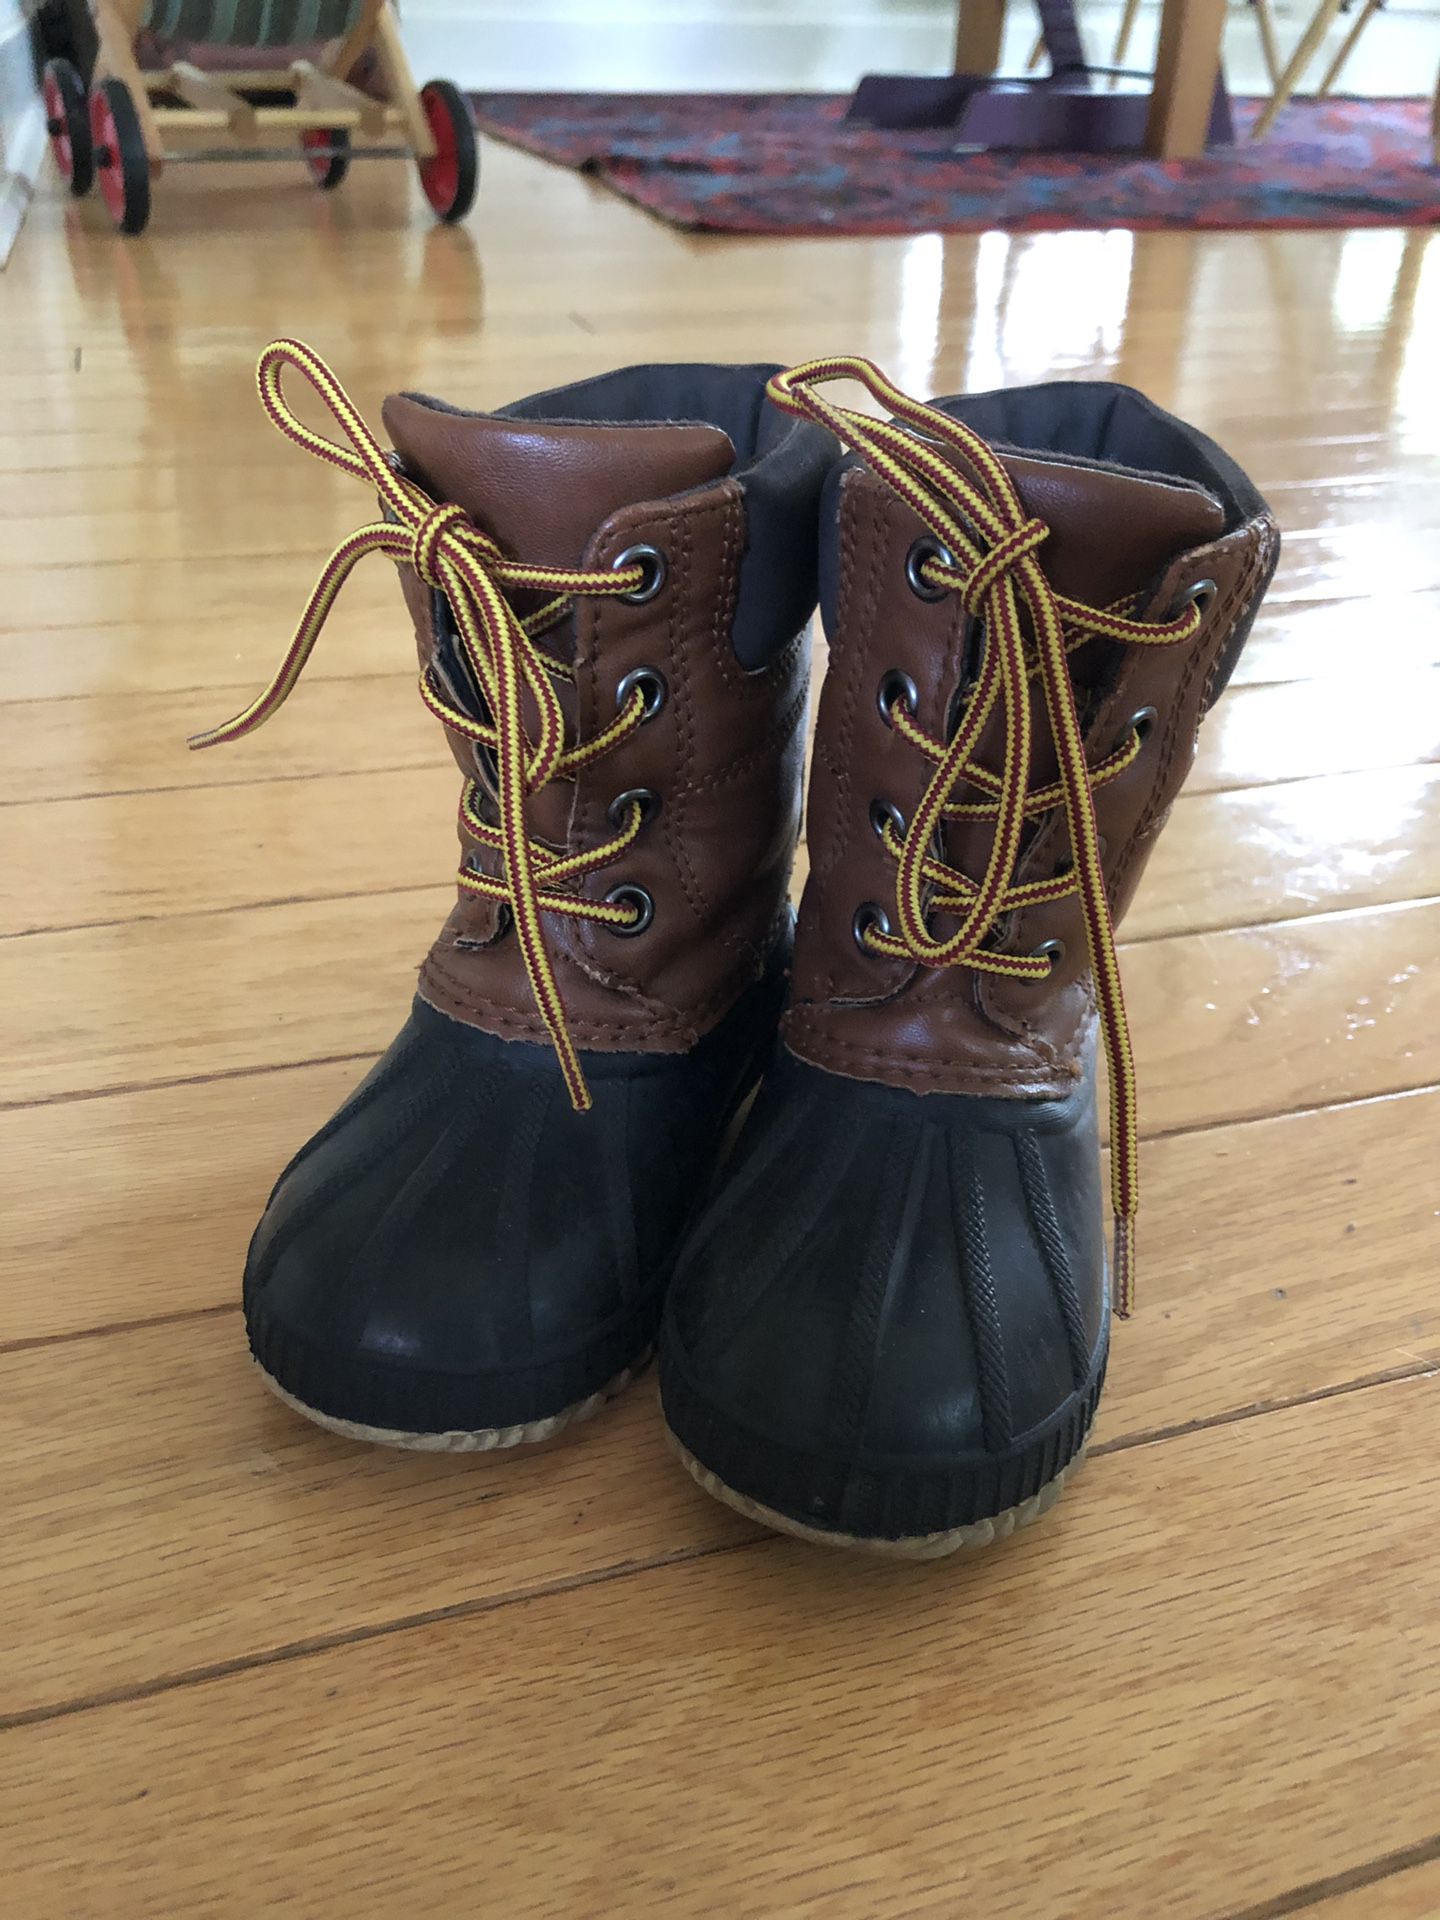 Gap Kids size 7/8 snow boots